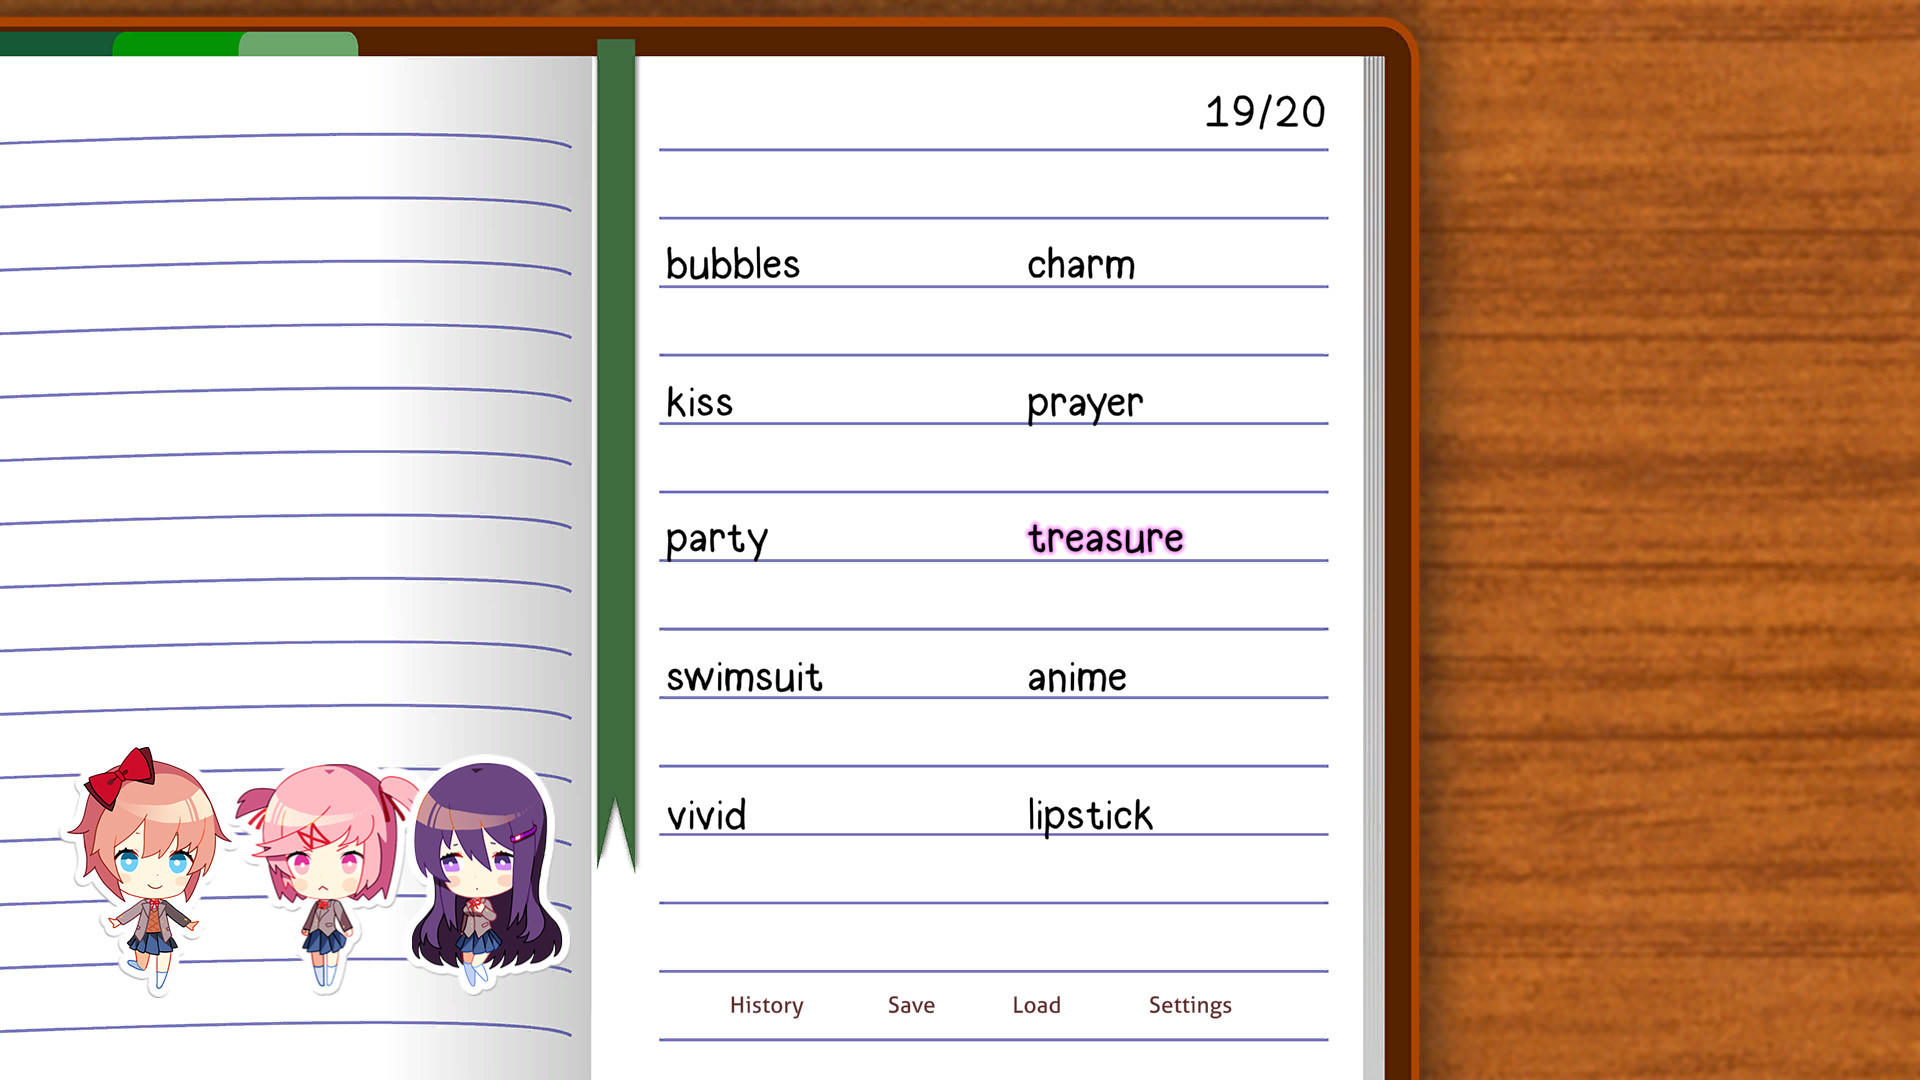 Screenshot of Doki Doki Literature Club Plus!